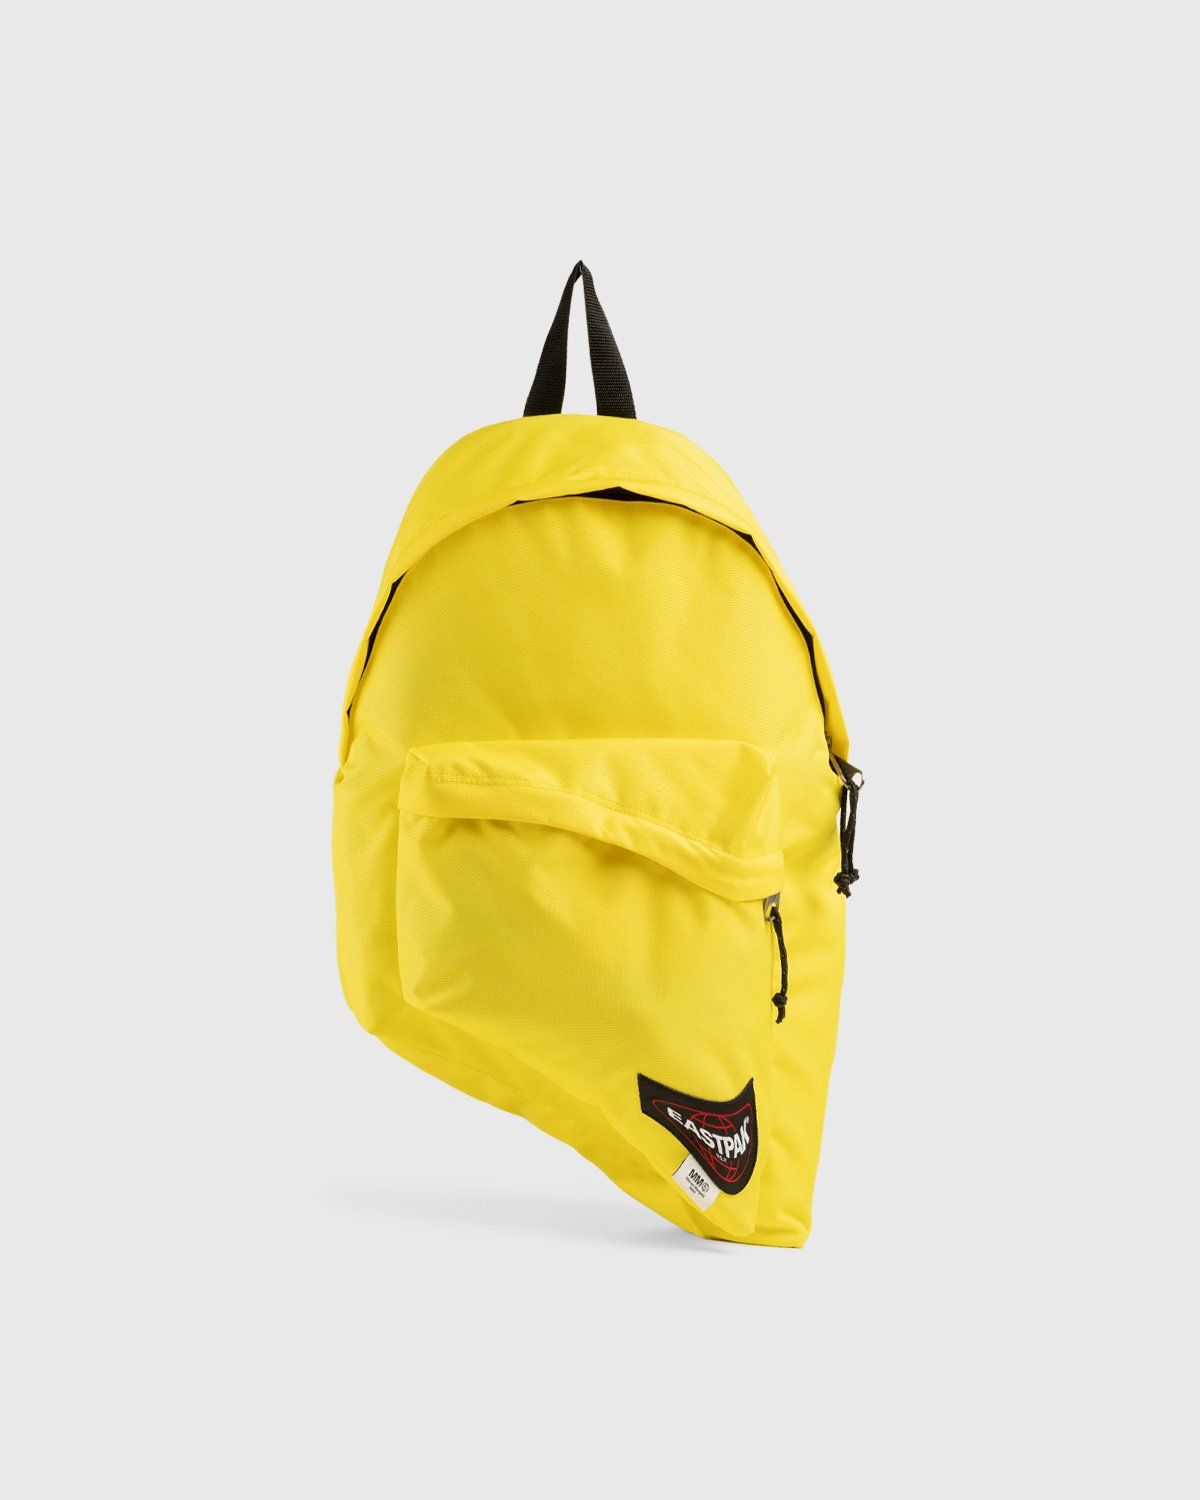 MM6 Maison Margiela x Eastpak – Zaino Backpack Yellow - Backpacks - Yellow - Image 1